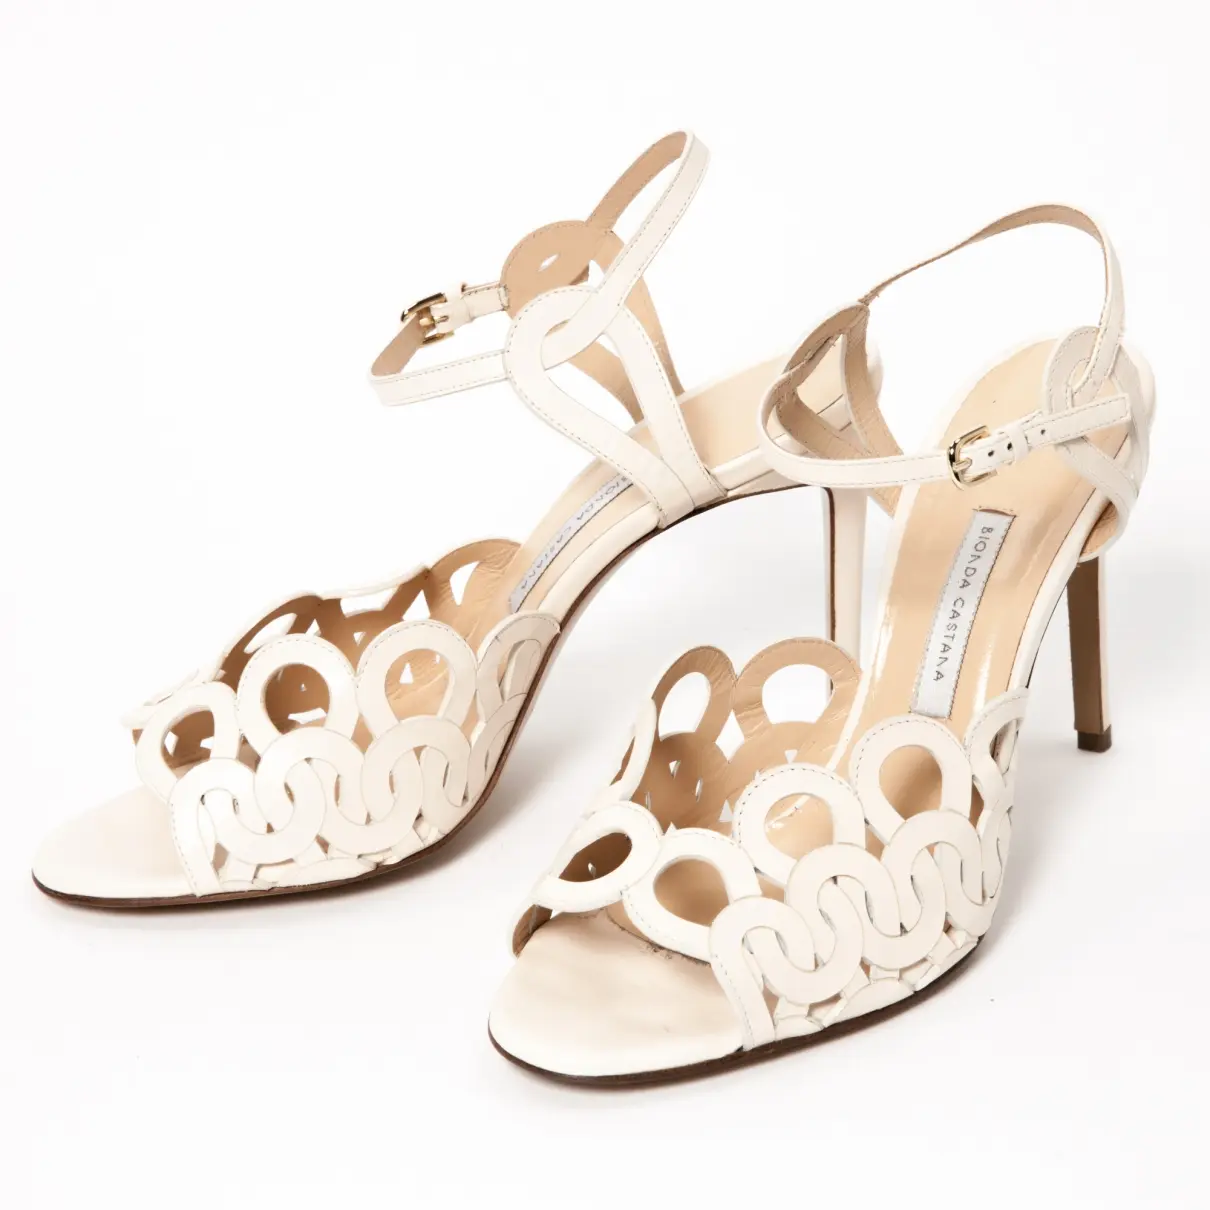 Bionda Castana Leather heels for sale